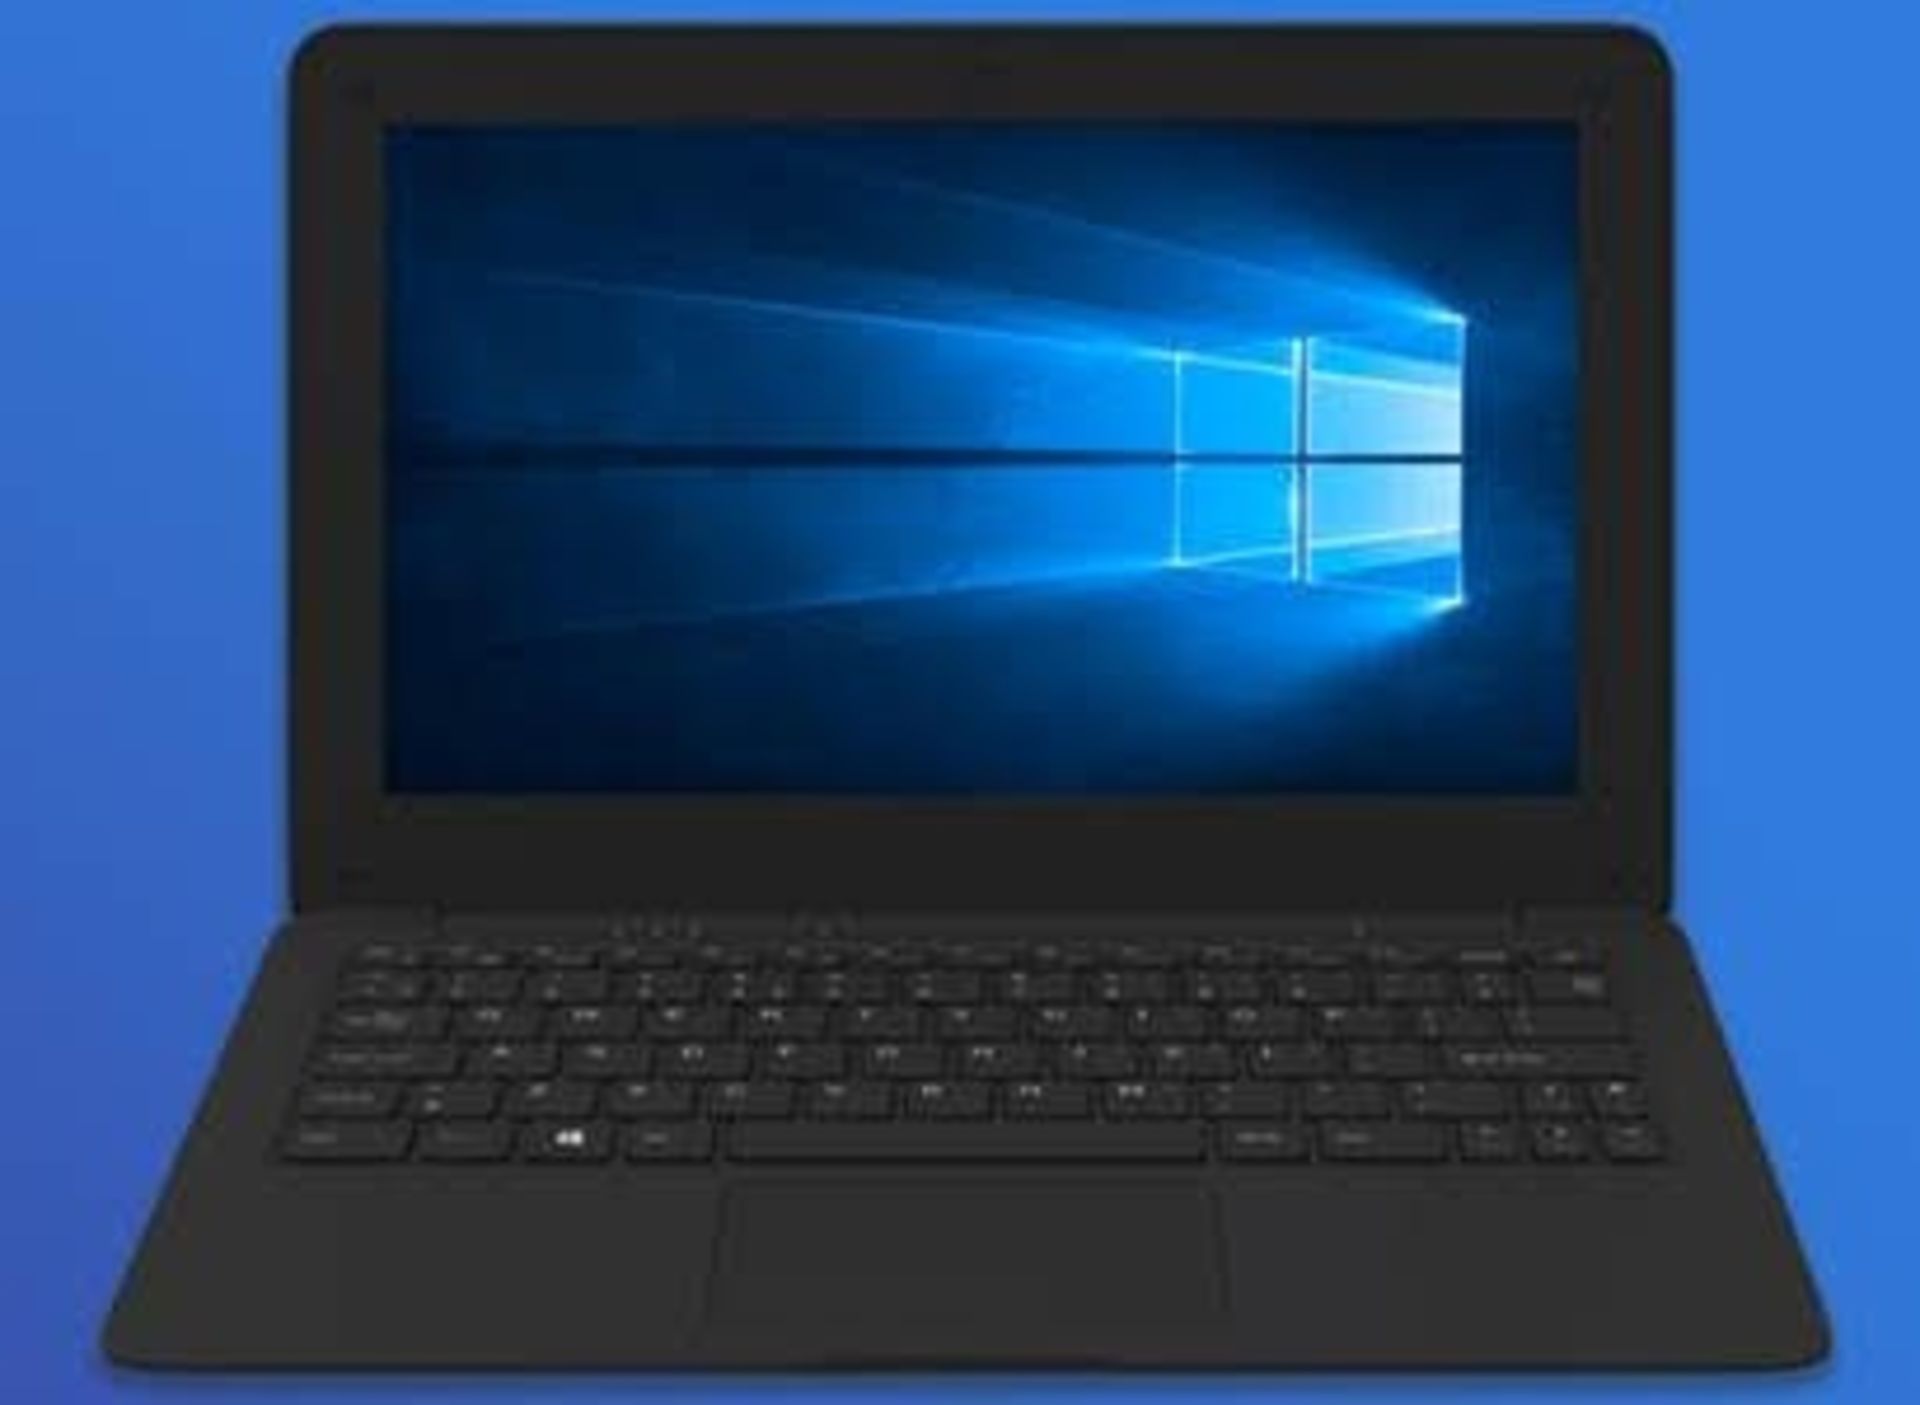 V Grade A/B 99568 Notebook Laptop - Windows 10 Home - 2GB RAM - 32GB EMMC - Precision Touch Pad